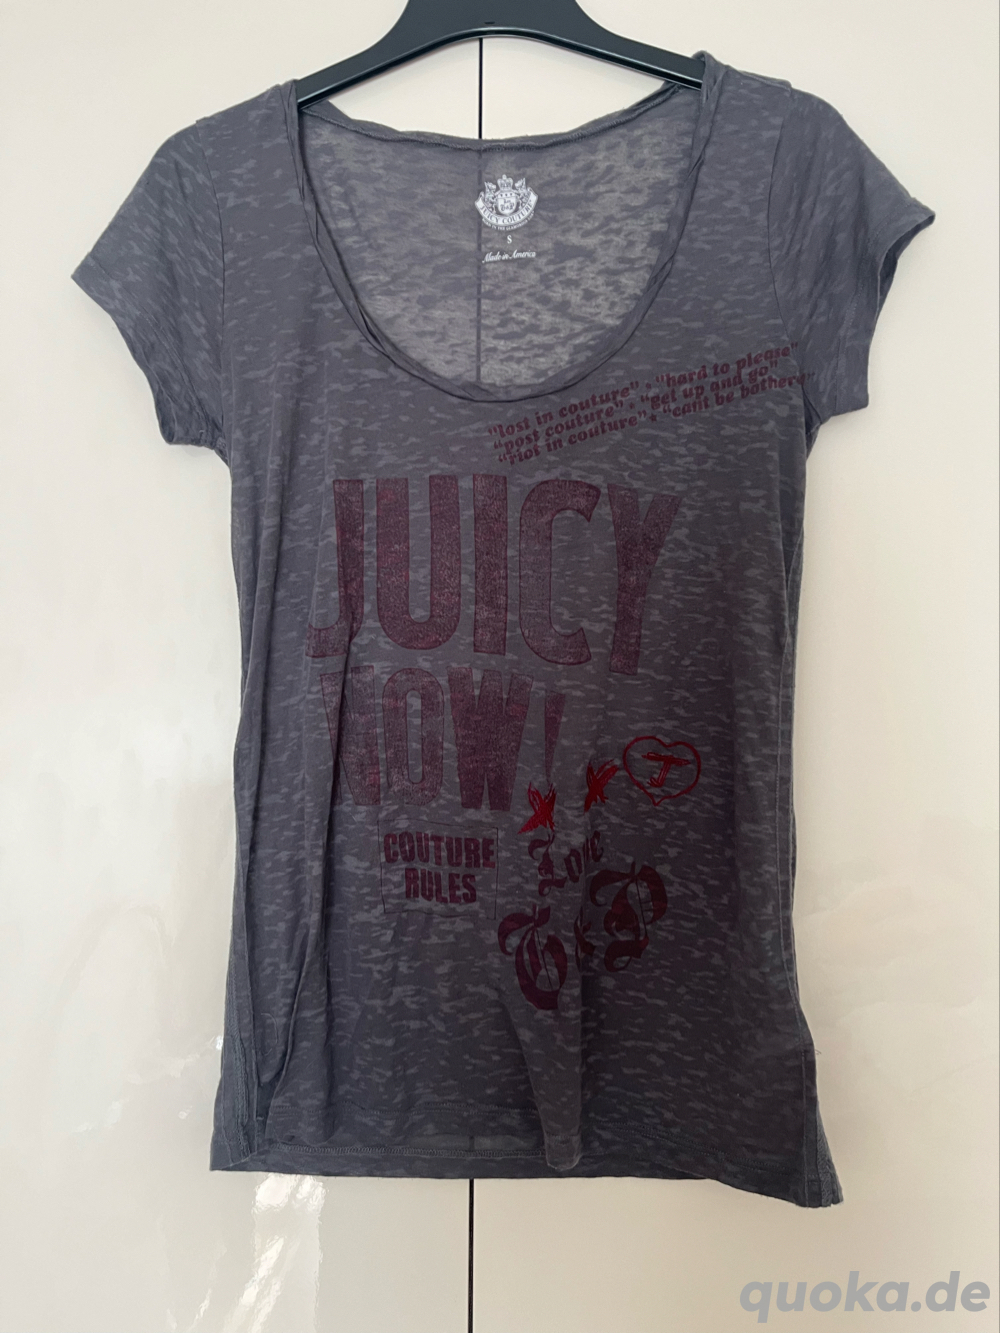 Damen T-Shirt Größe S von Juicy Couture grau rot made in America